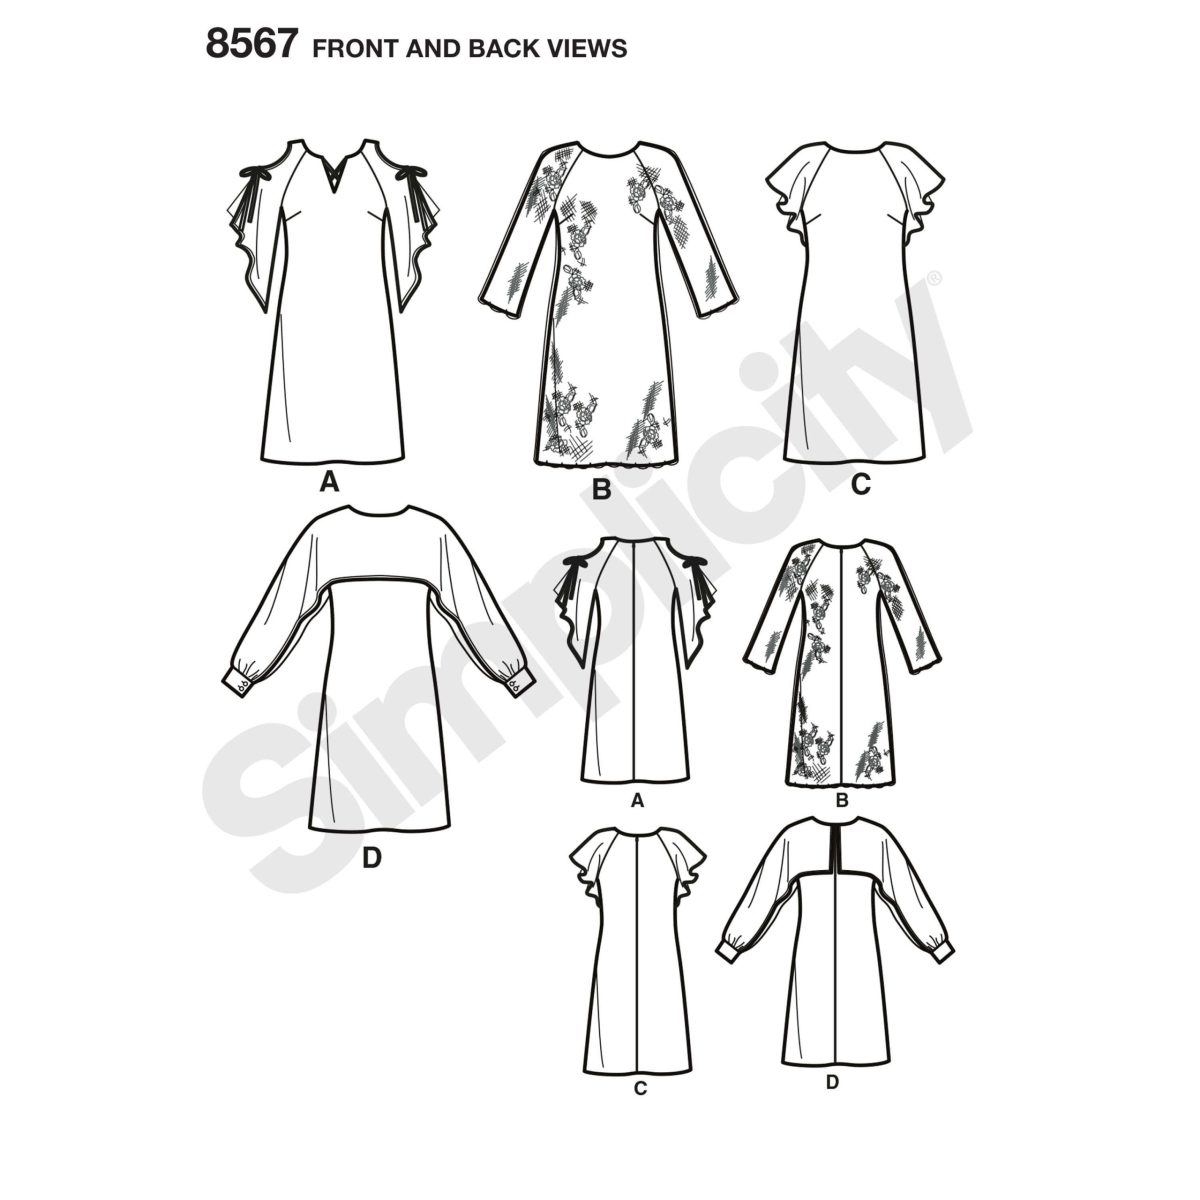 Simplicity Pattern 8567 Girls' and Girls' Plus Dress